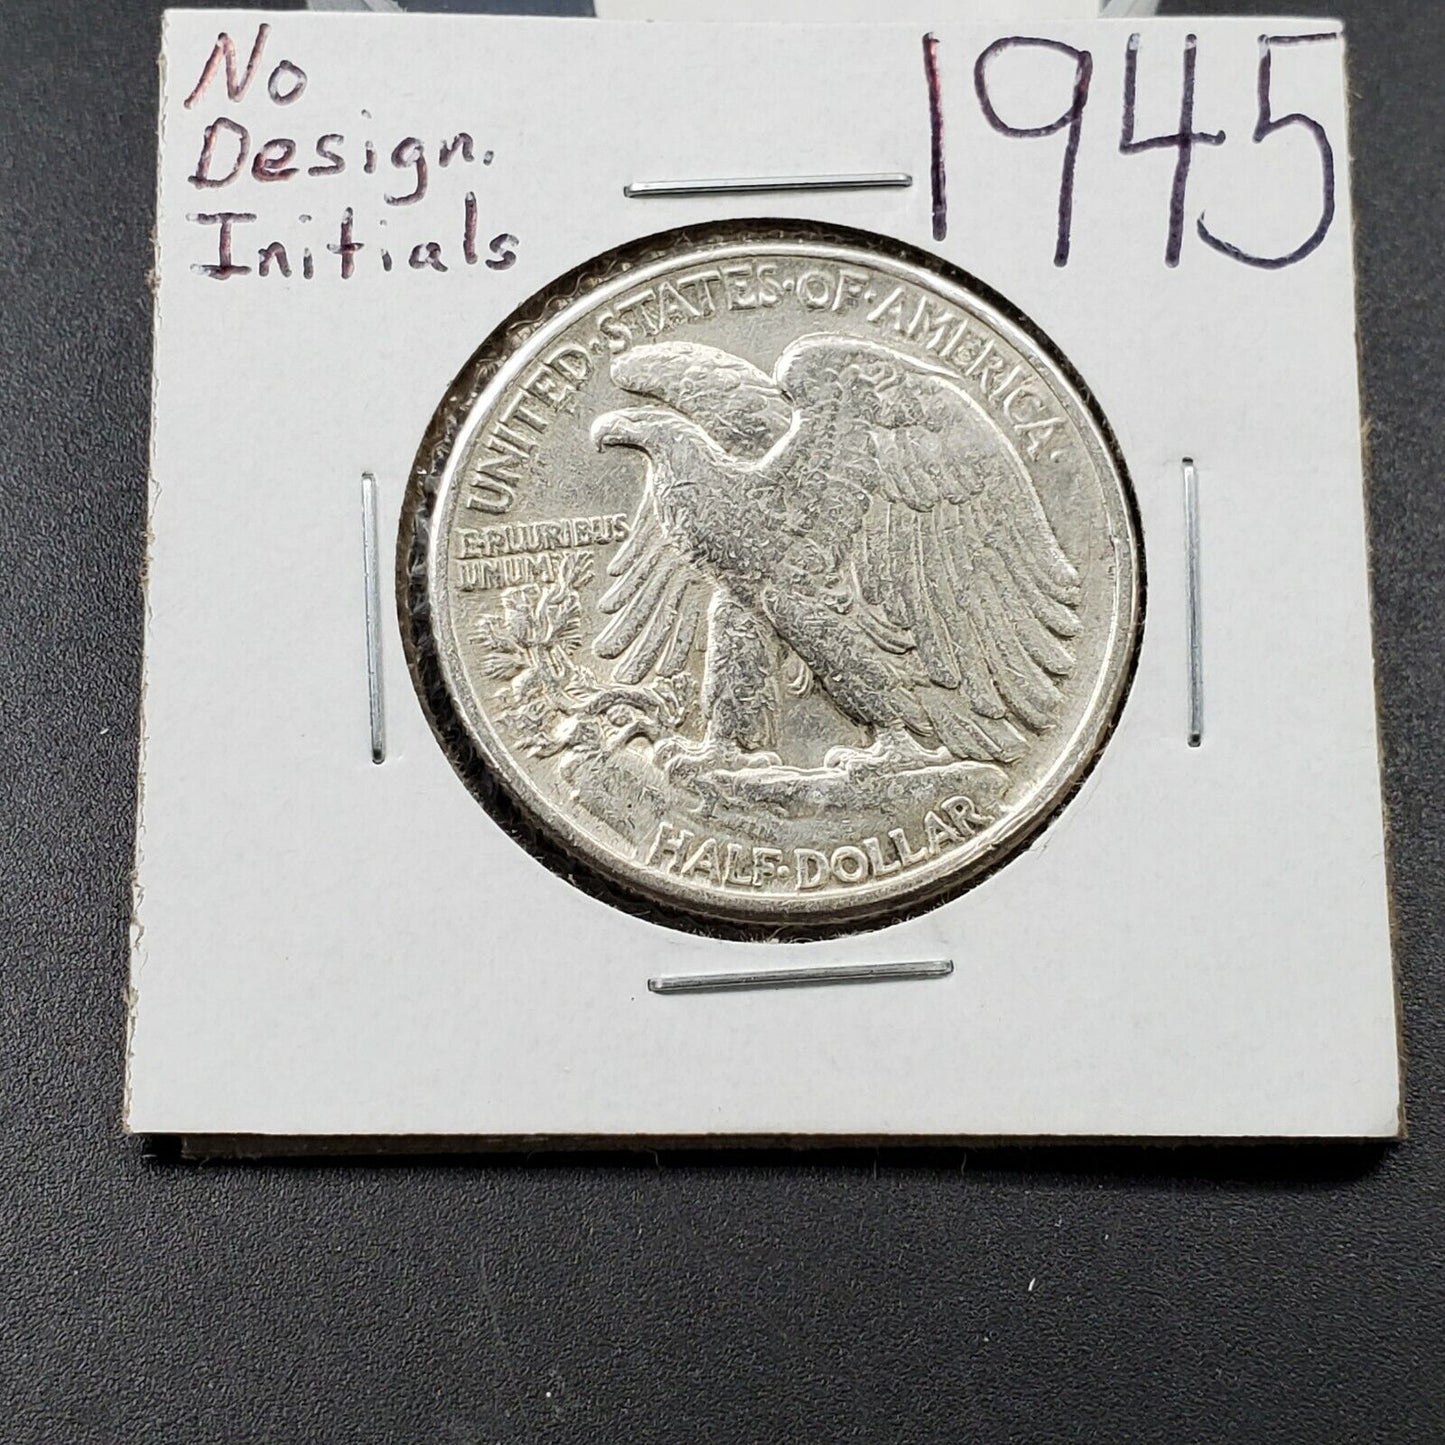 1945 P Walking Liberty Half Dollar Coin FS-901 MISSING INITIALS ERROR Variety